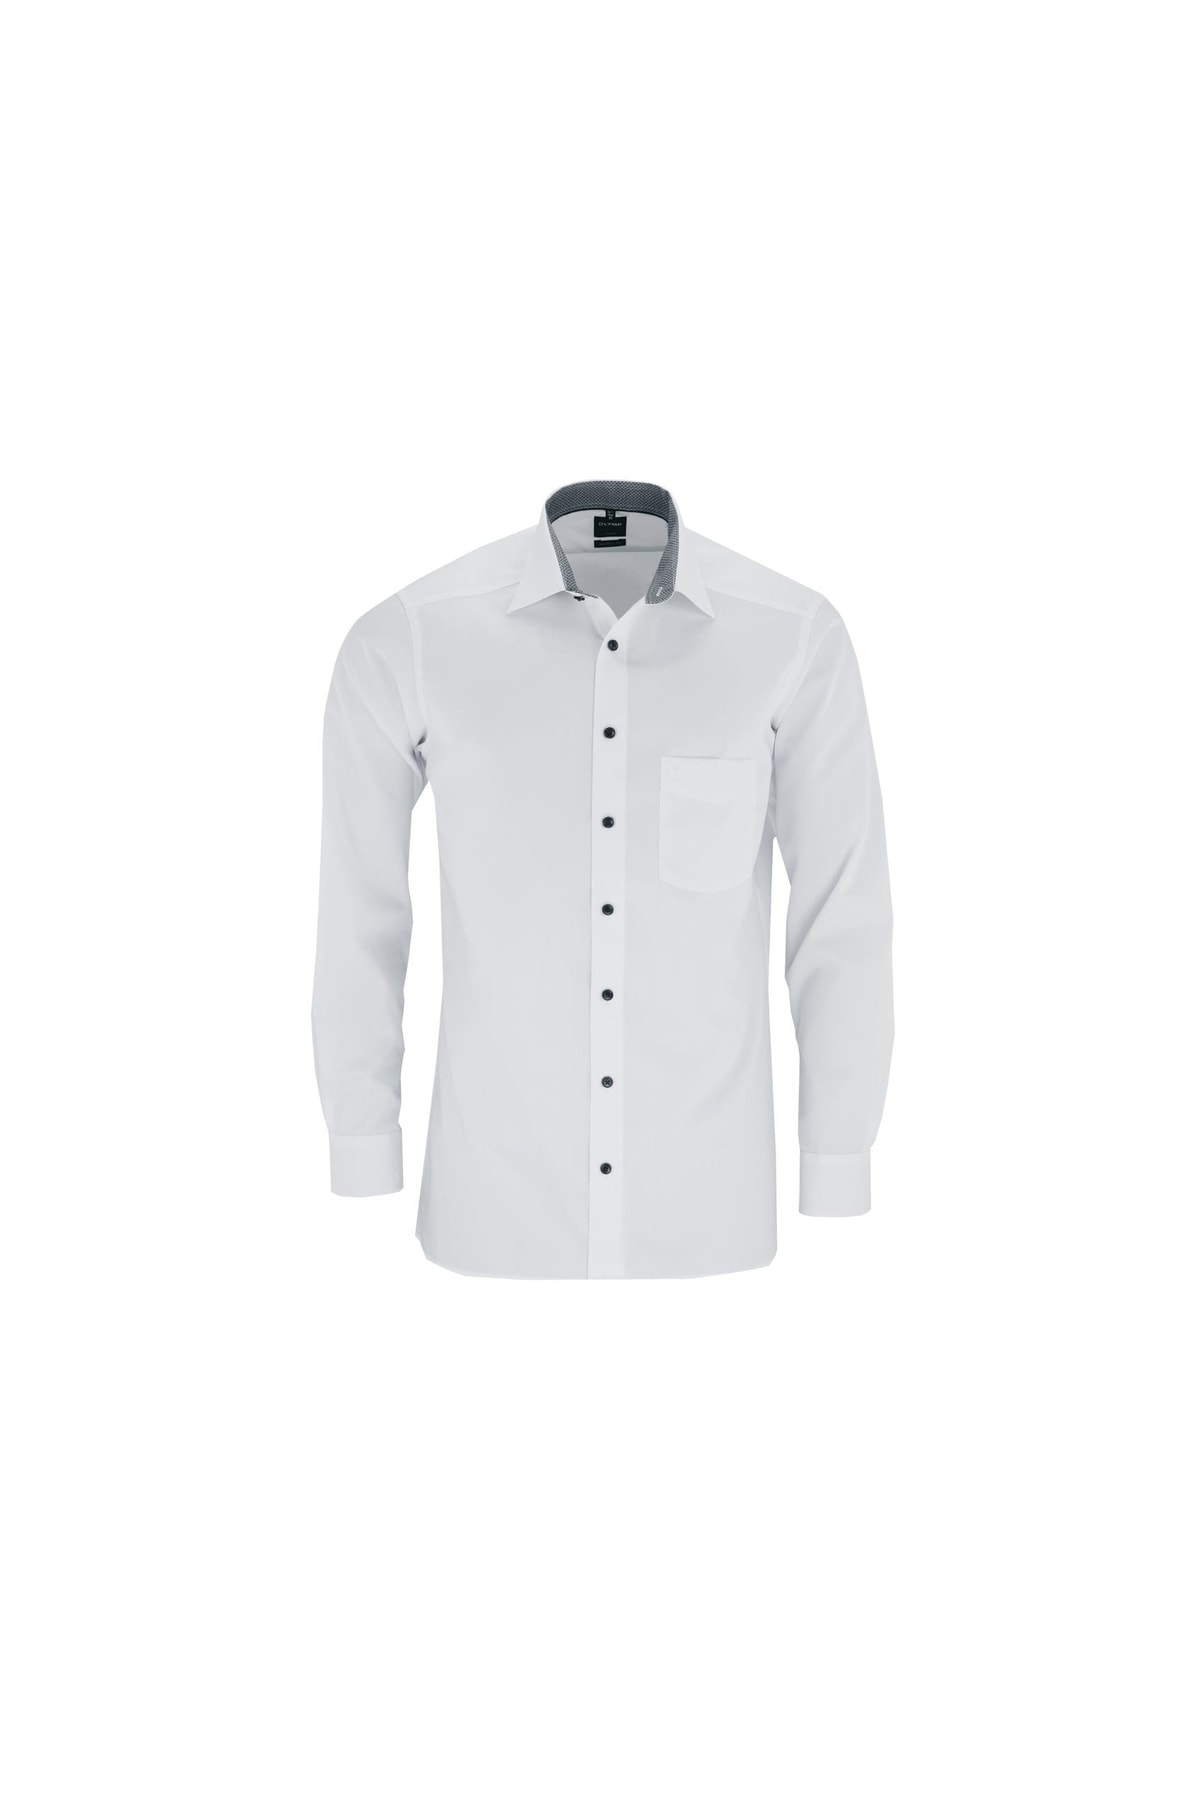 OLYMP Hemd Weiß Regular Fit Fast ausverkauft FN7504